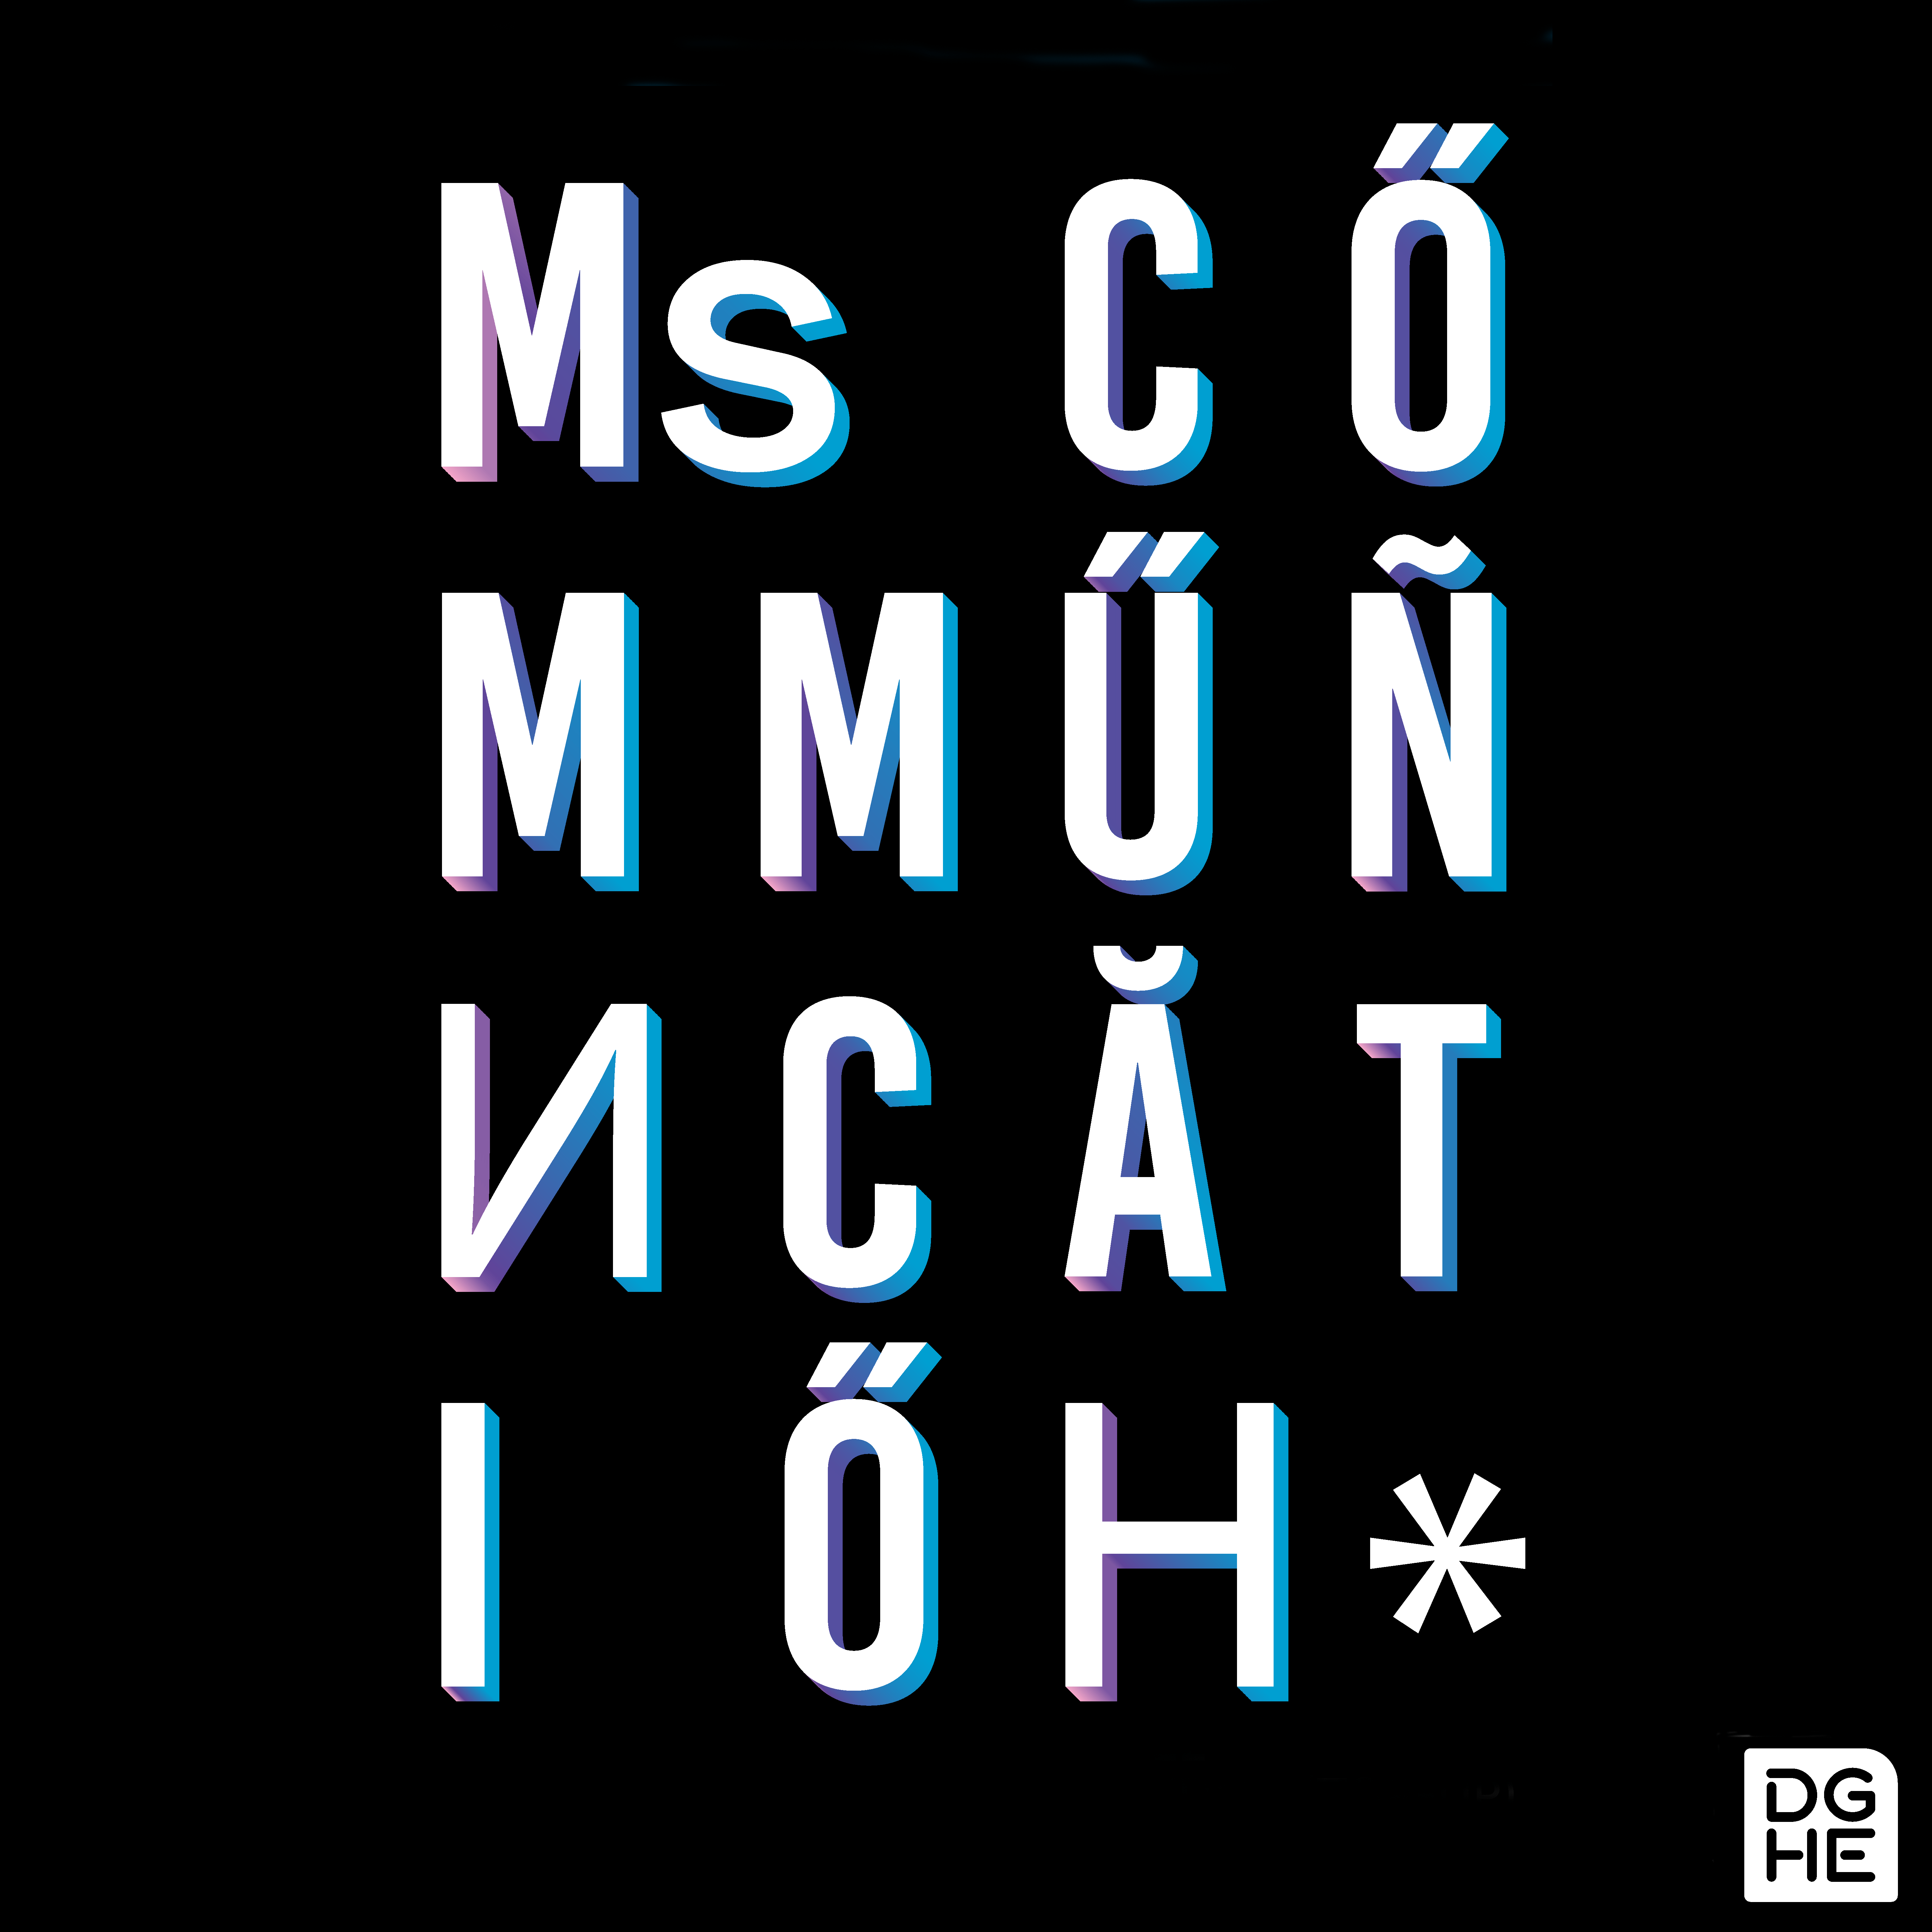 ‘MsCommunication’ Exhibited at Degree Art Show 2022